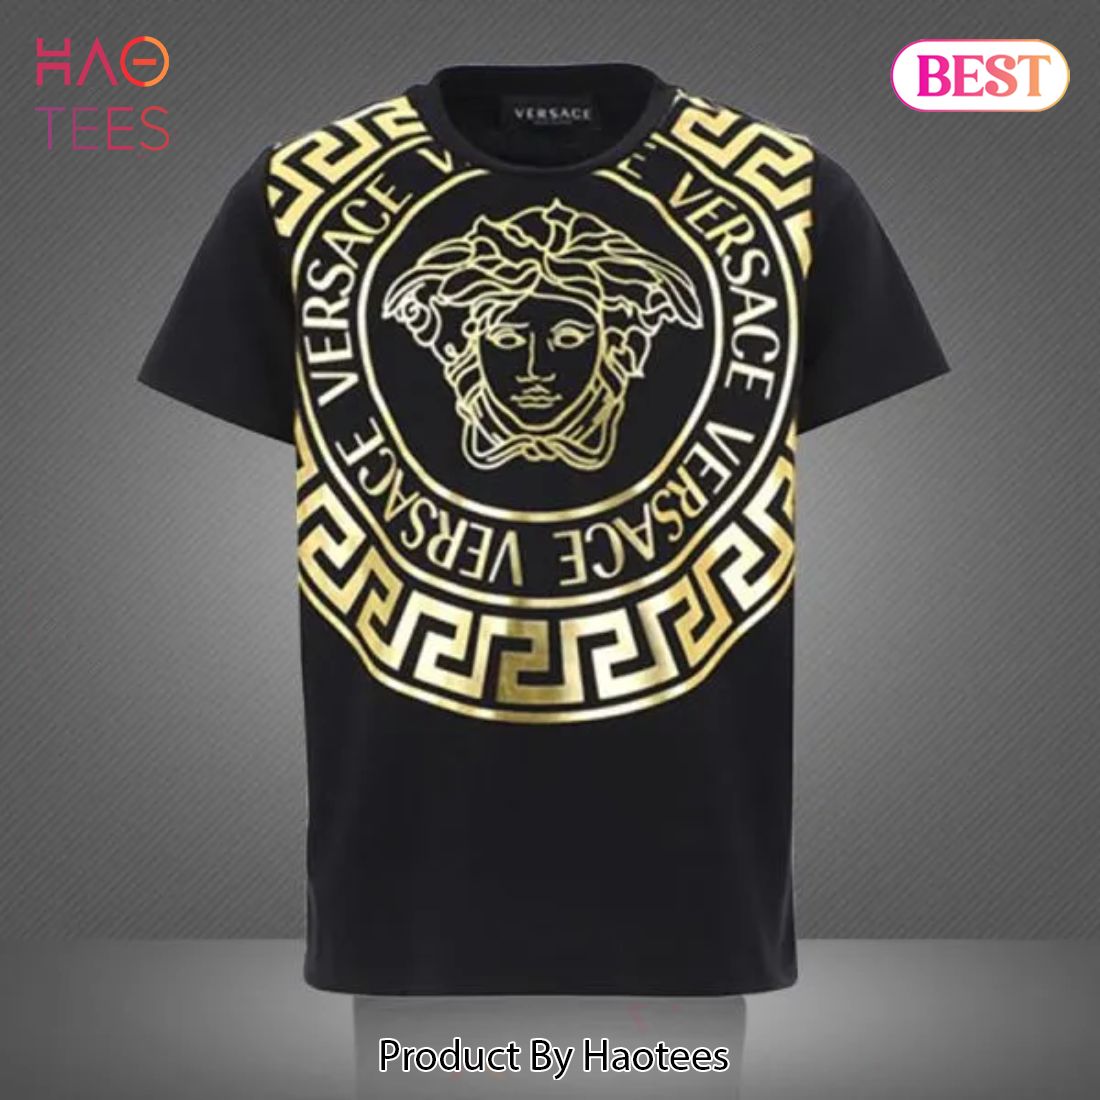 NEW FASHION] Versace Golden Versace Black Luxury Brand Premium T-Shirt  Outfit For Men Women